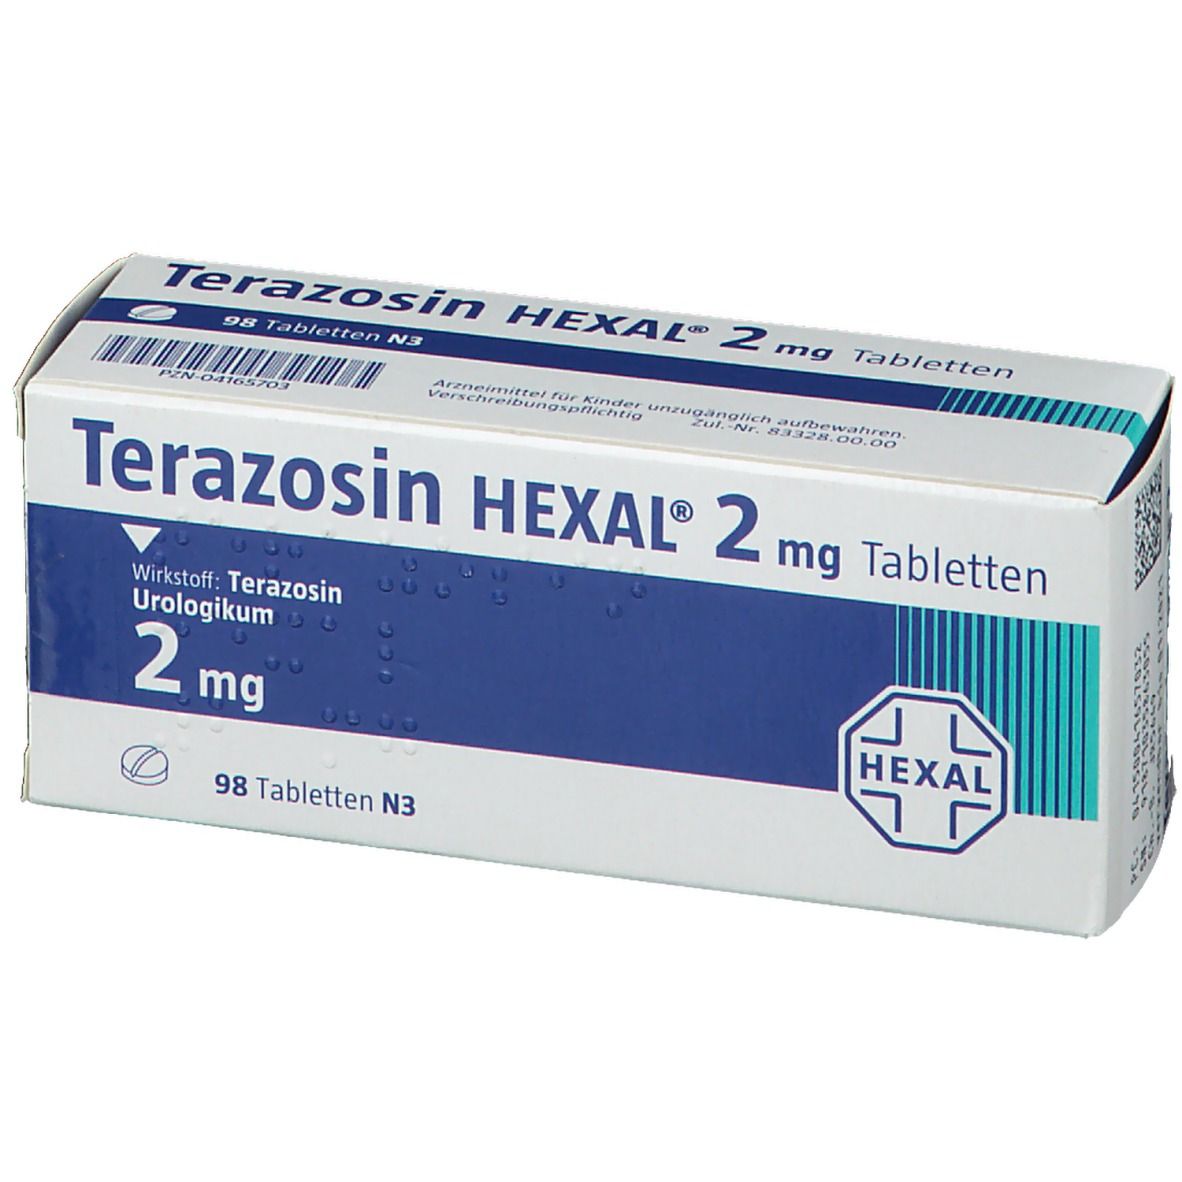 Terazosin HEXAL® 2 mg